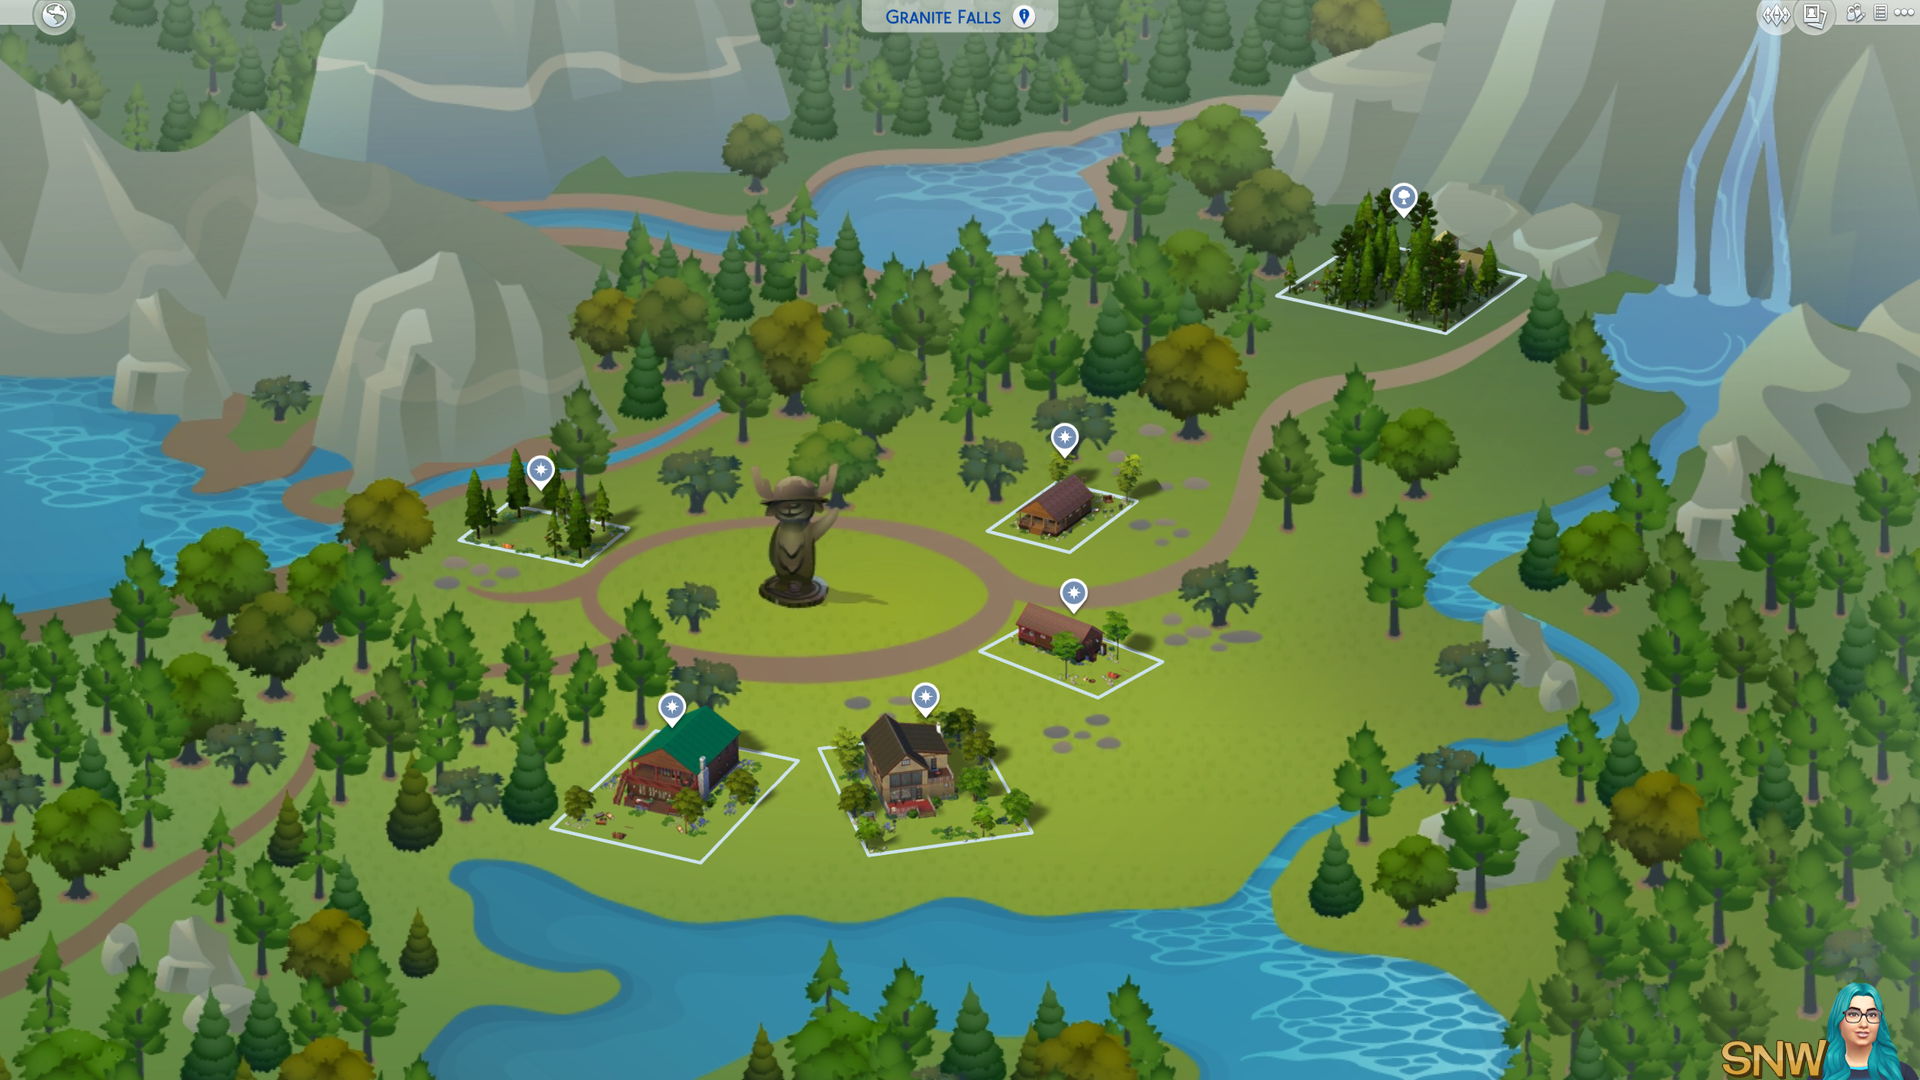 The Sims 4: Granite Falls world